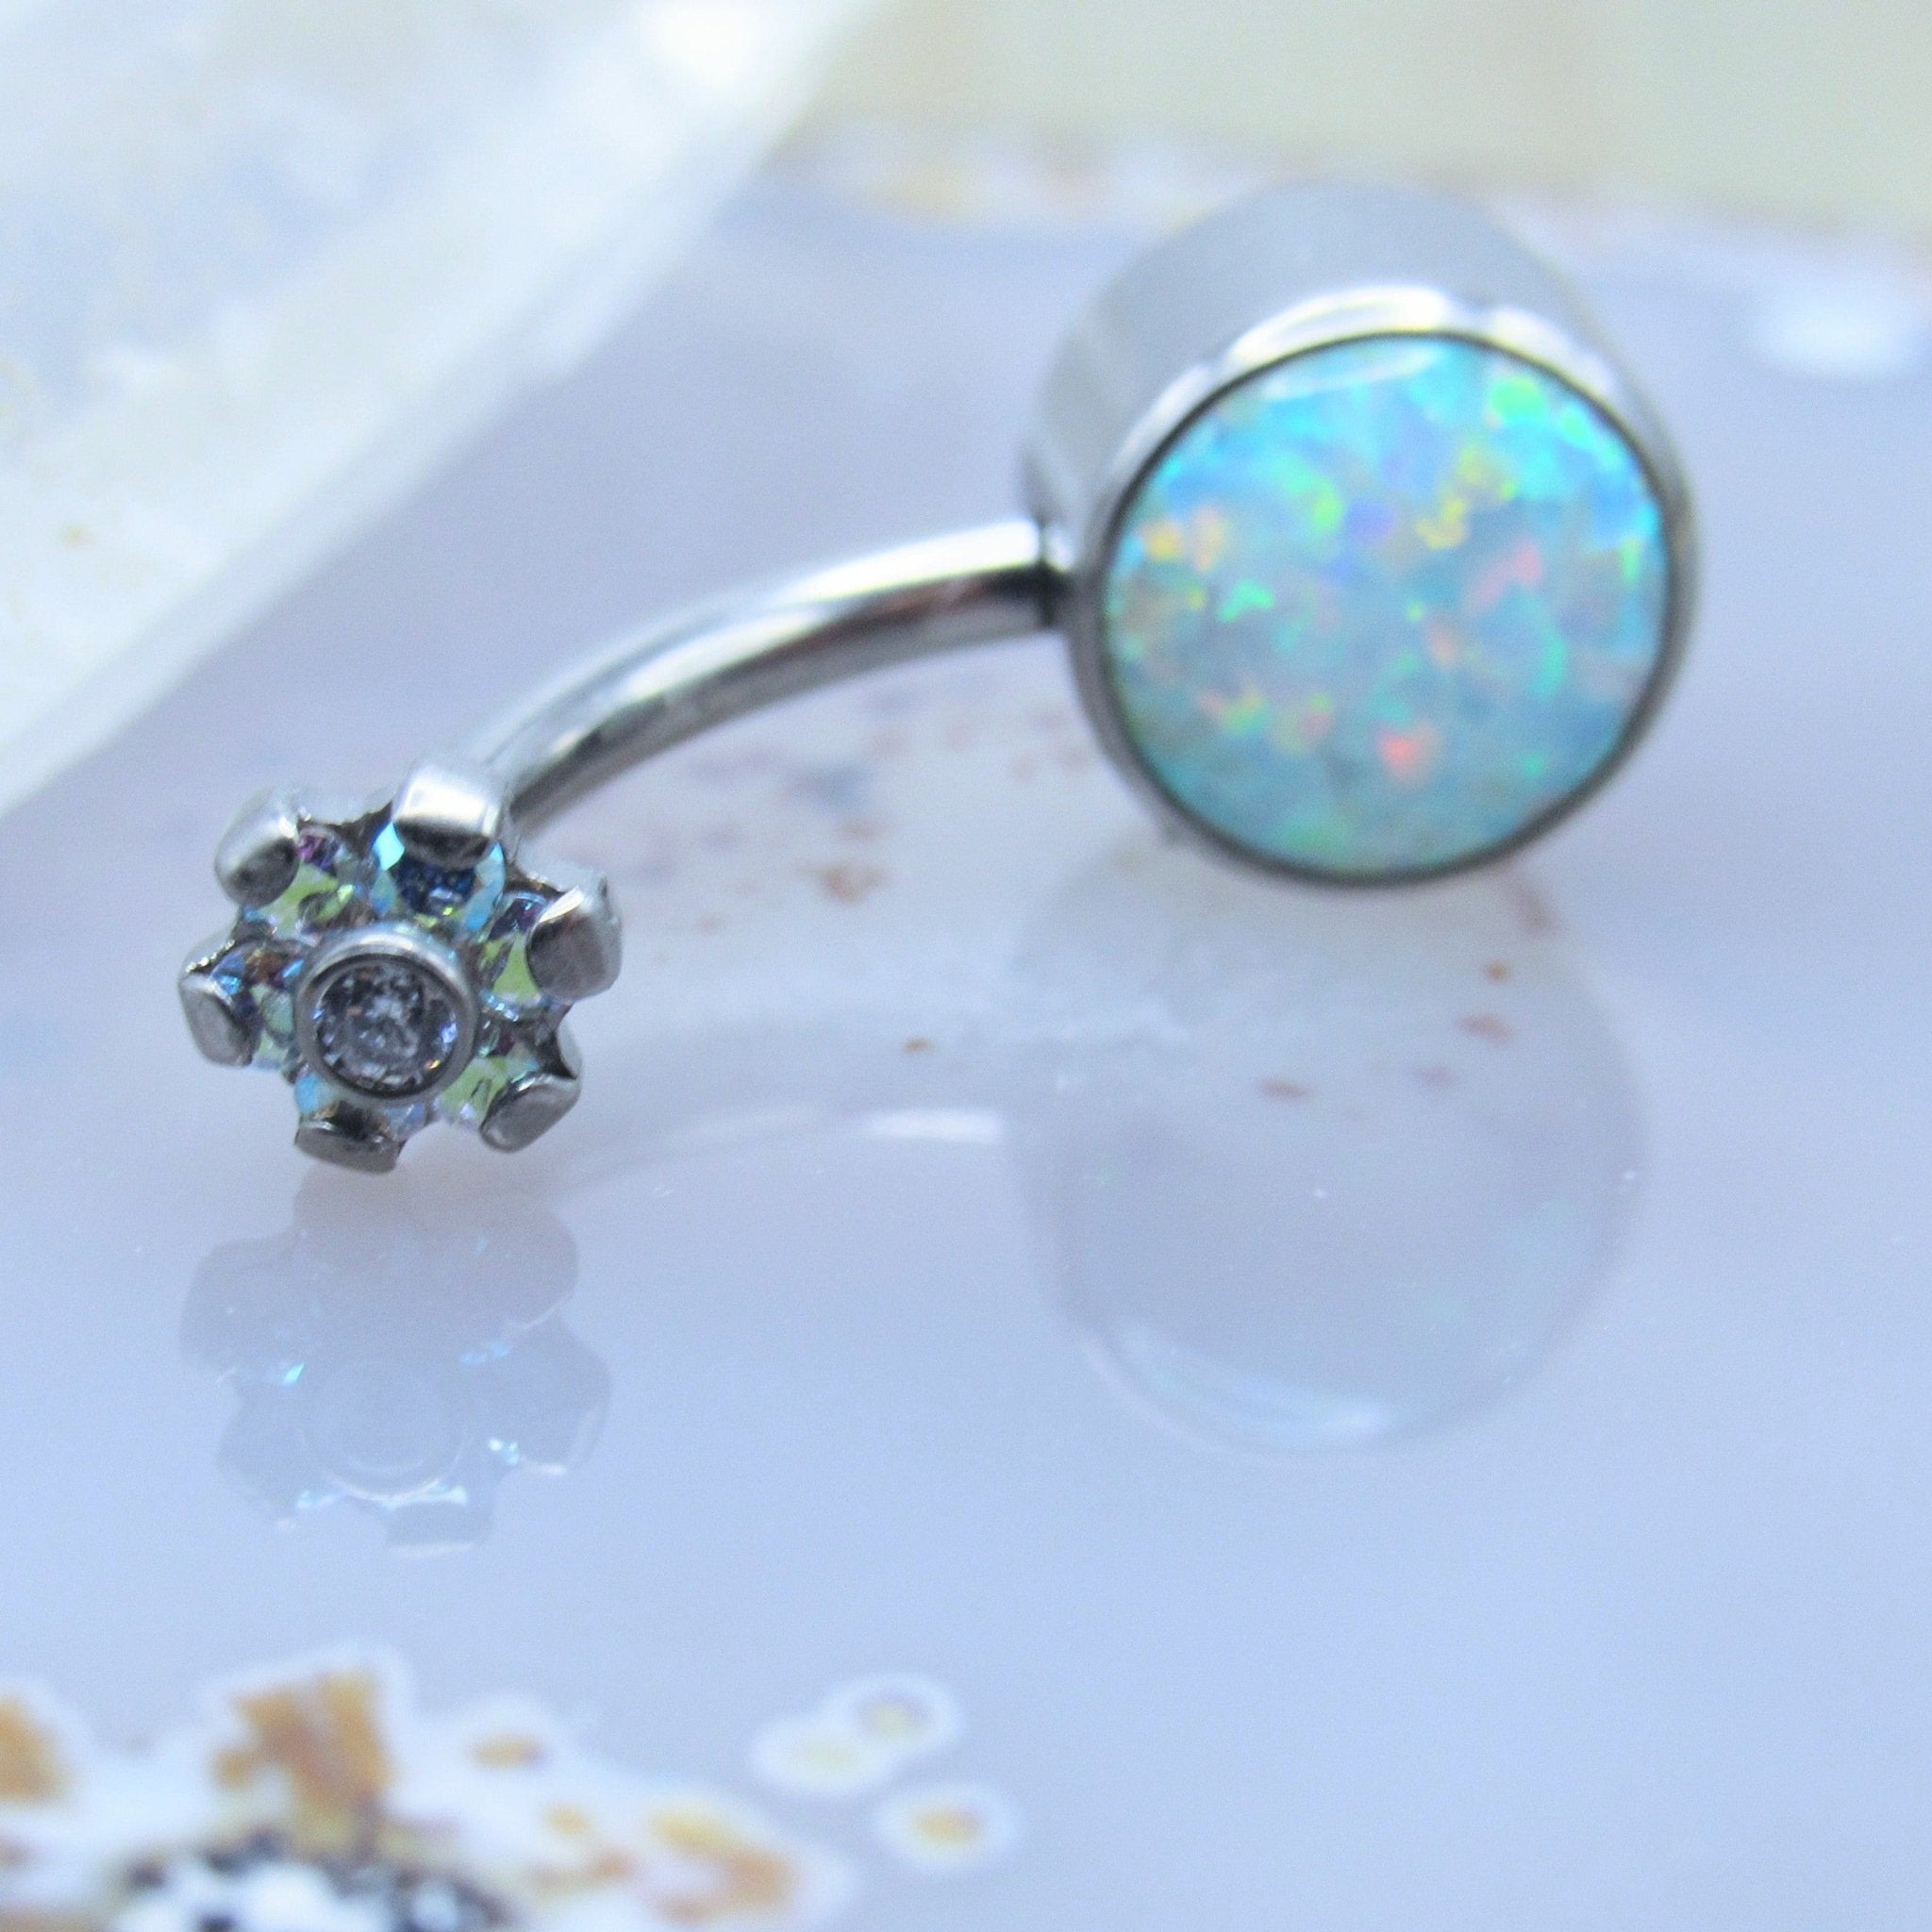 Flower gemstone white opal belly button piercing ring 14g 3/8